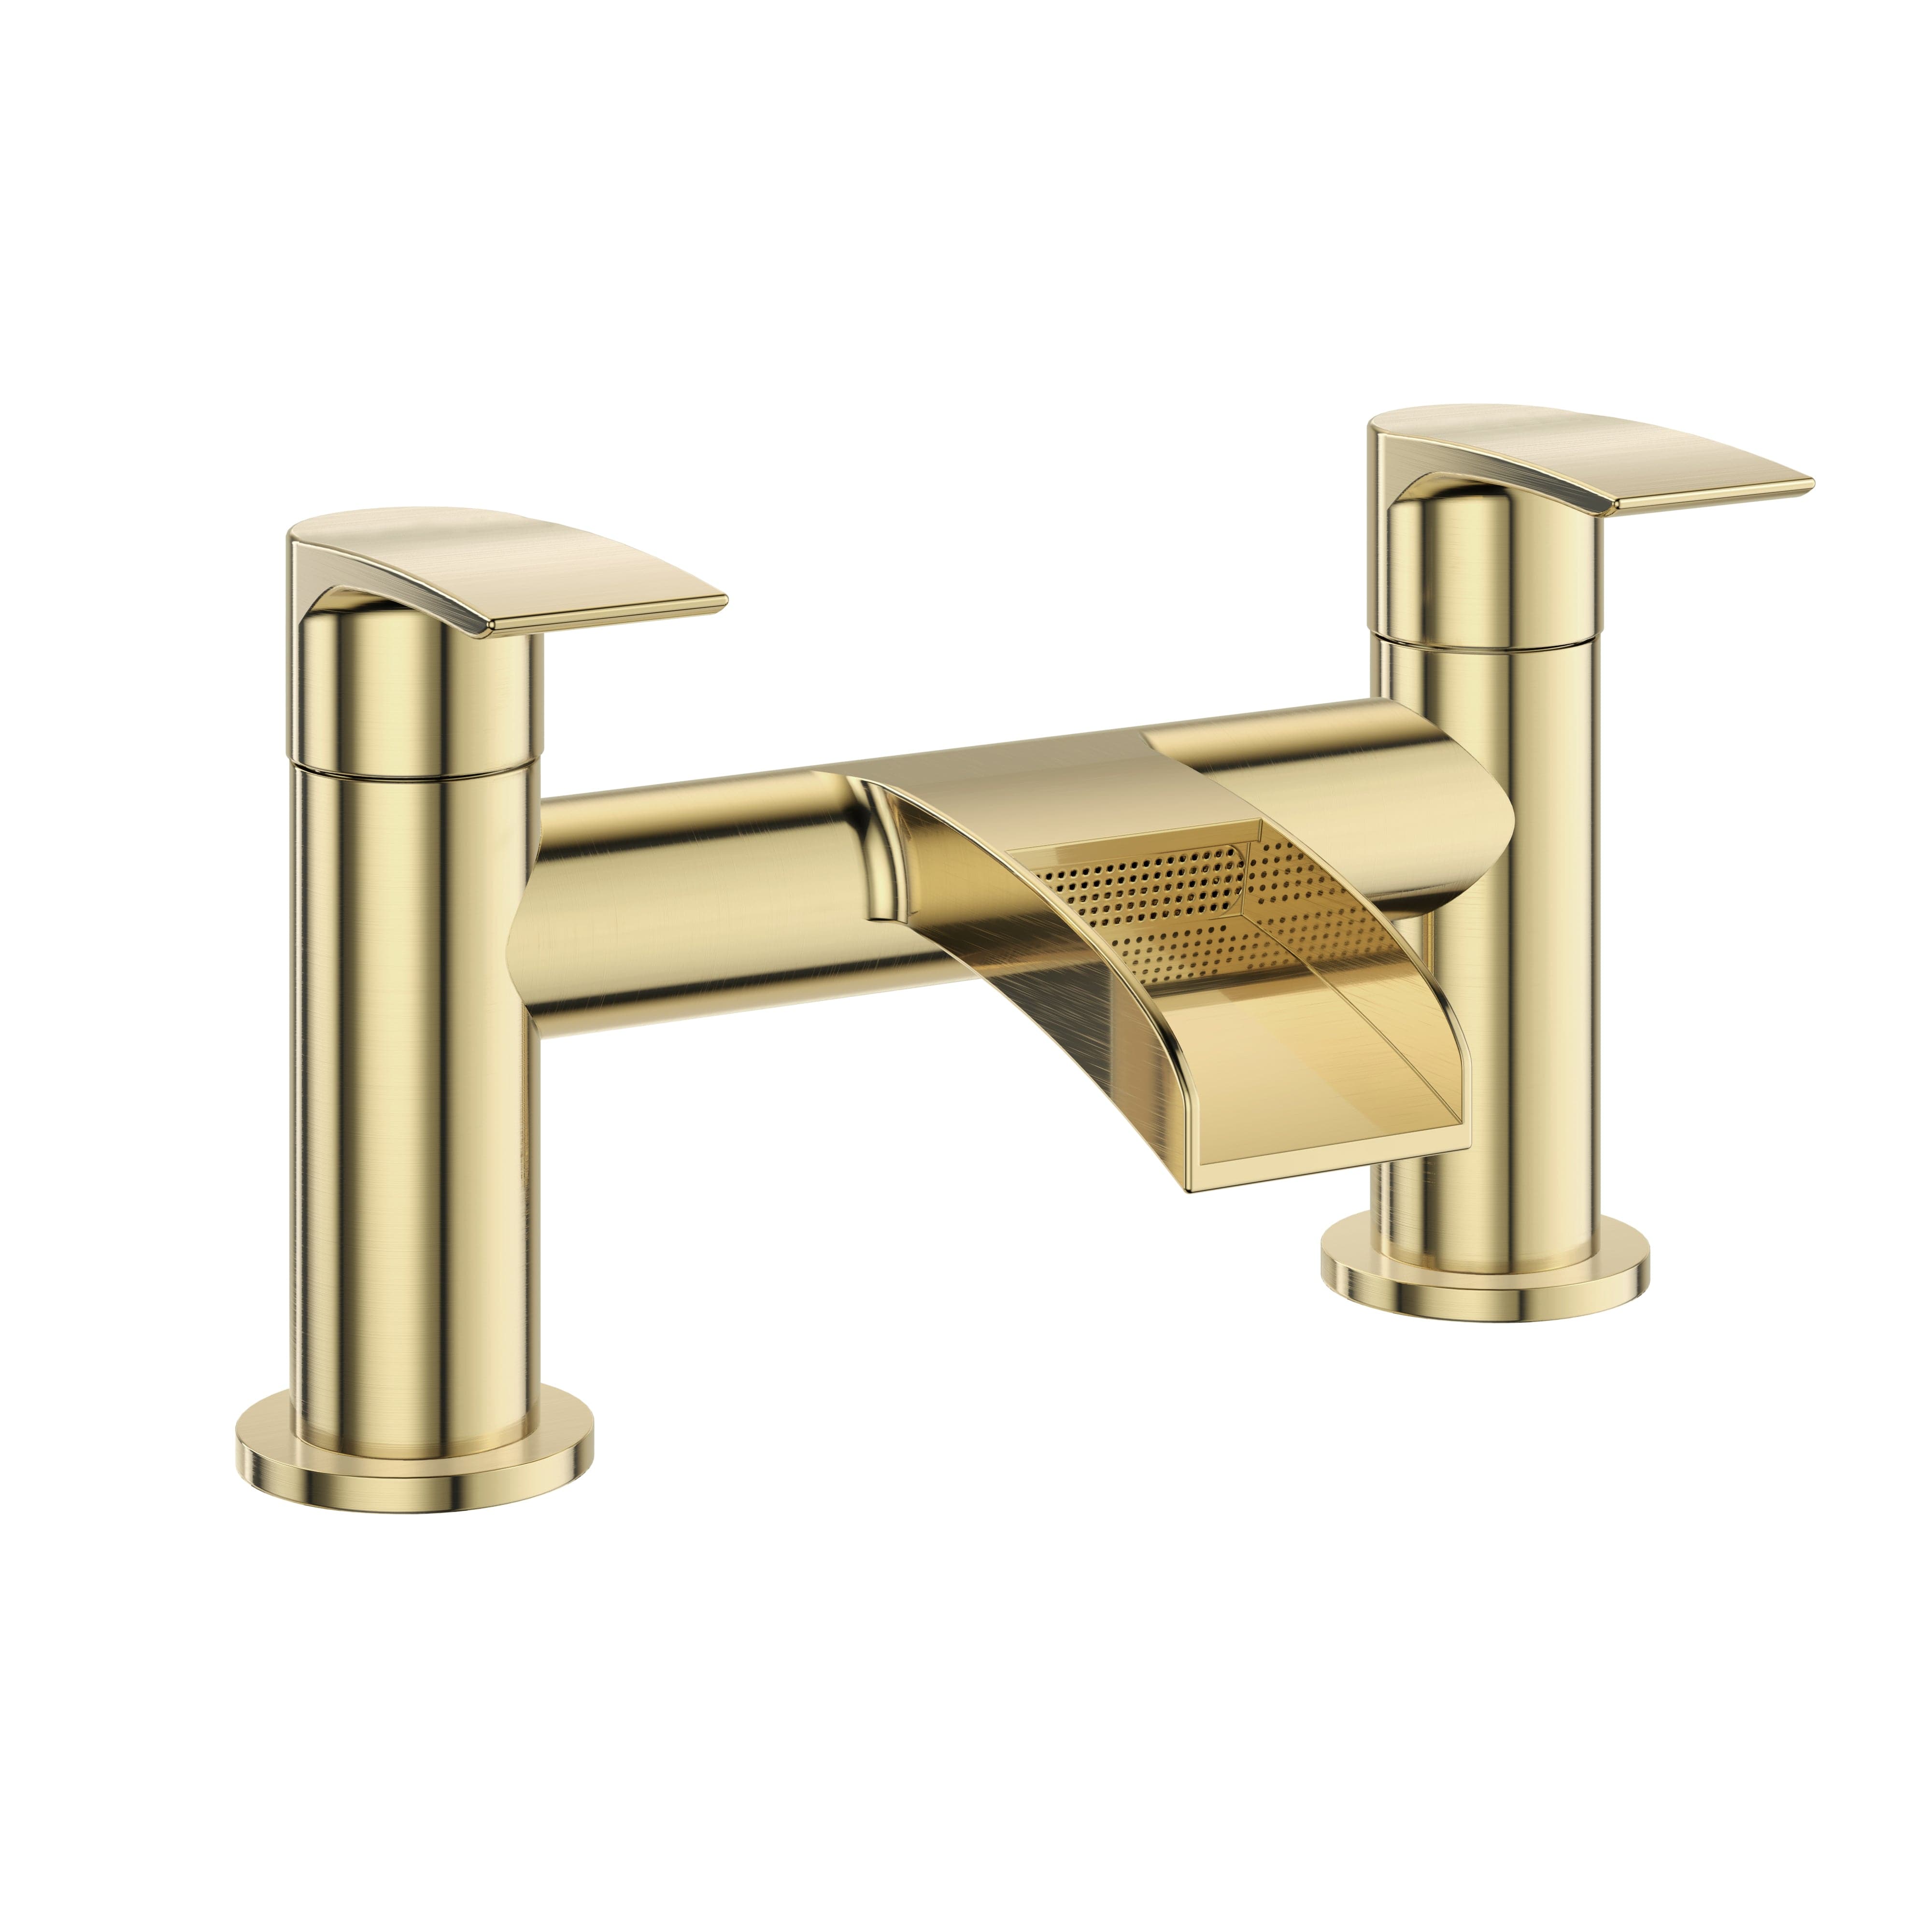 Symphony Round Waterfall Bath Filler Mixer Tap - Brushed Brass, elegant design, luxury bathroom taps, UK home improvement.